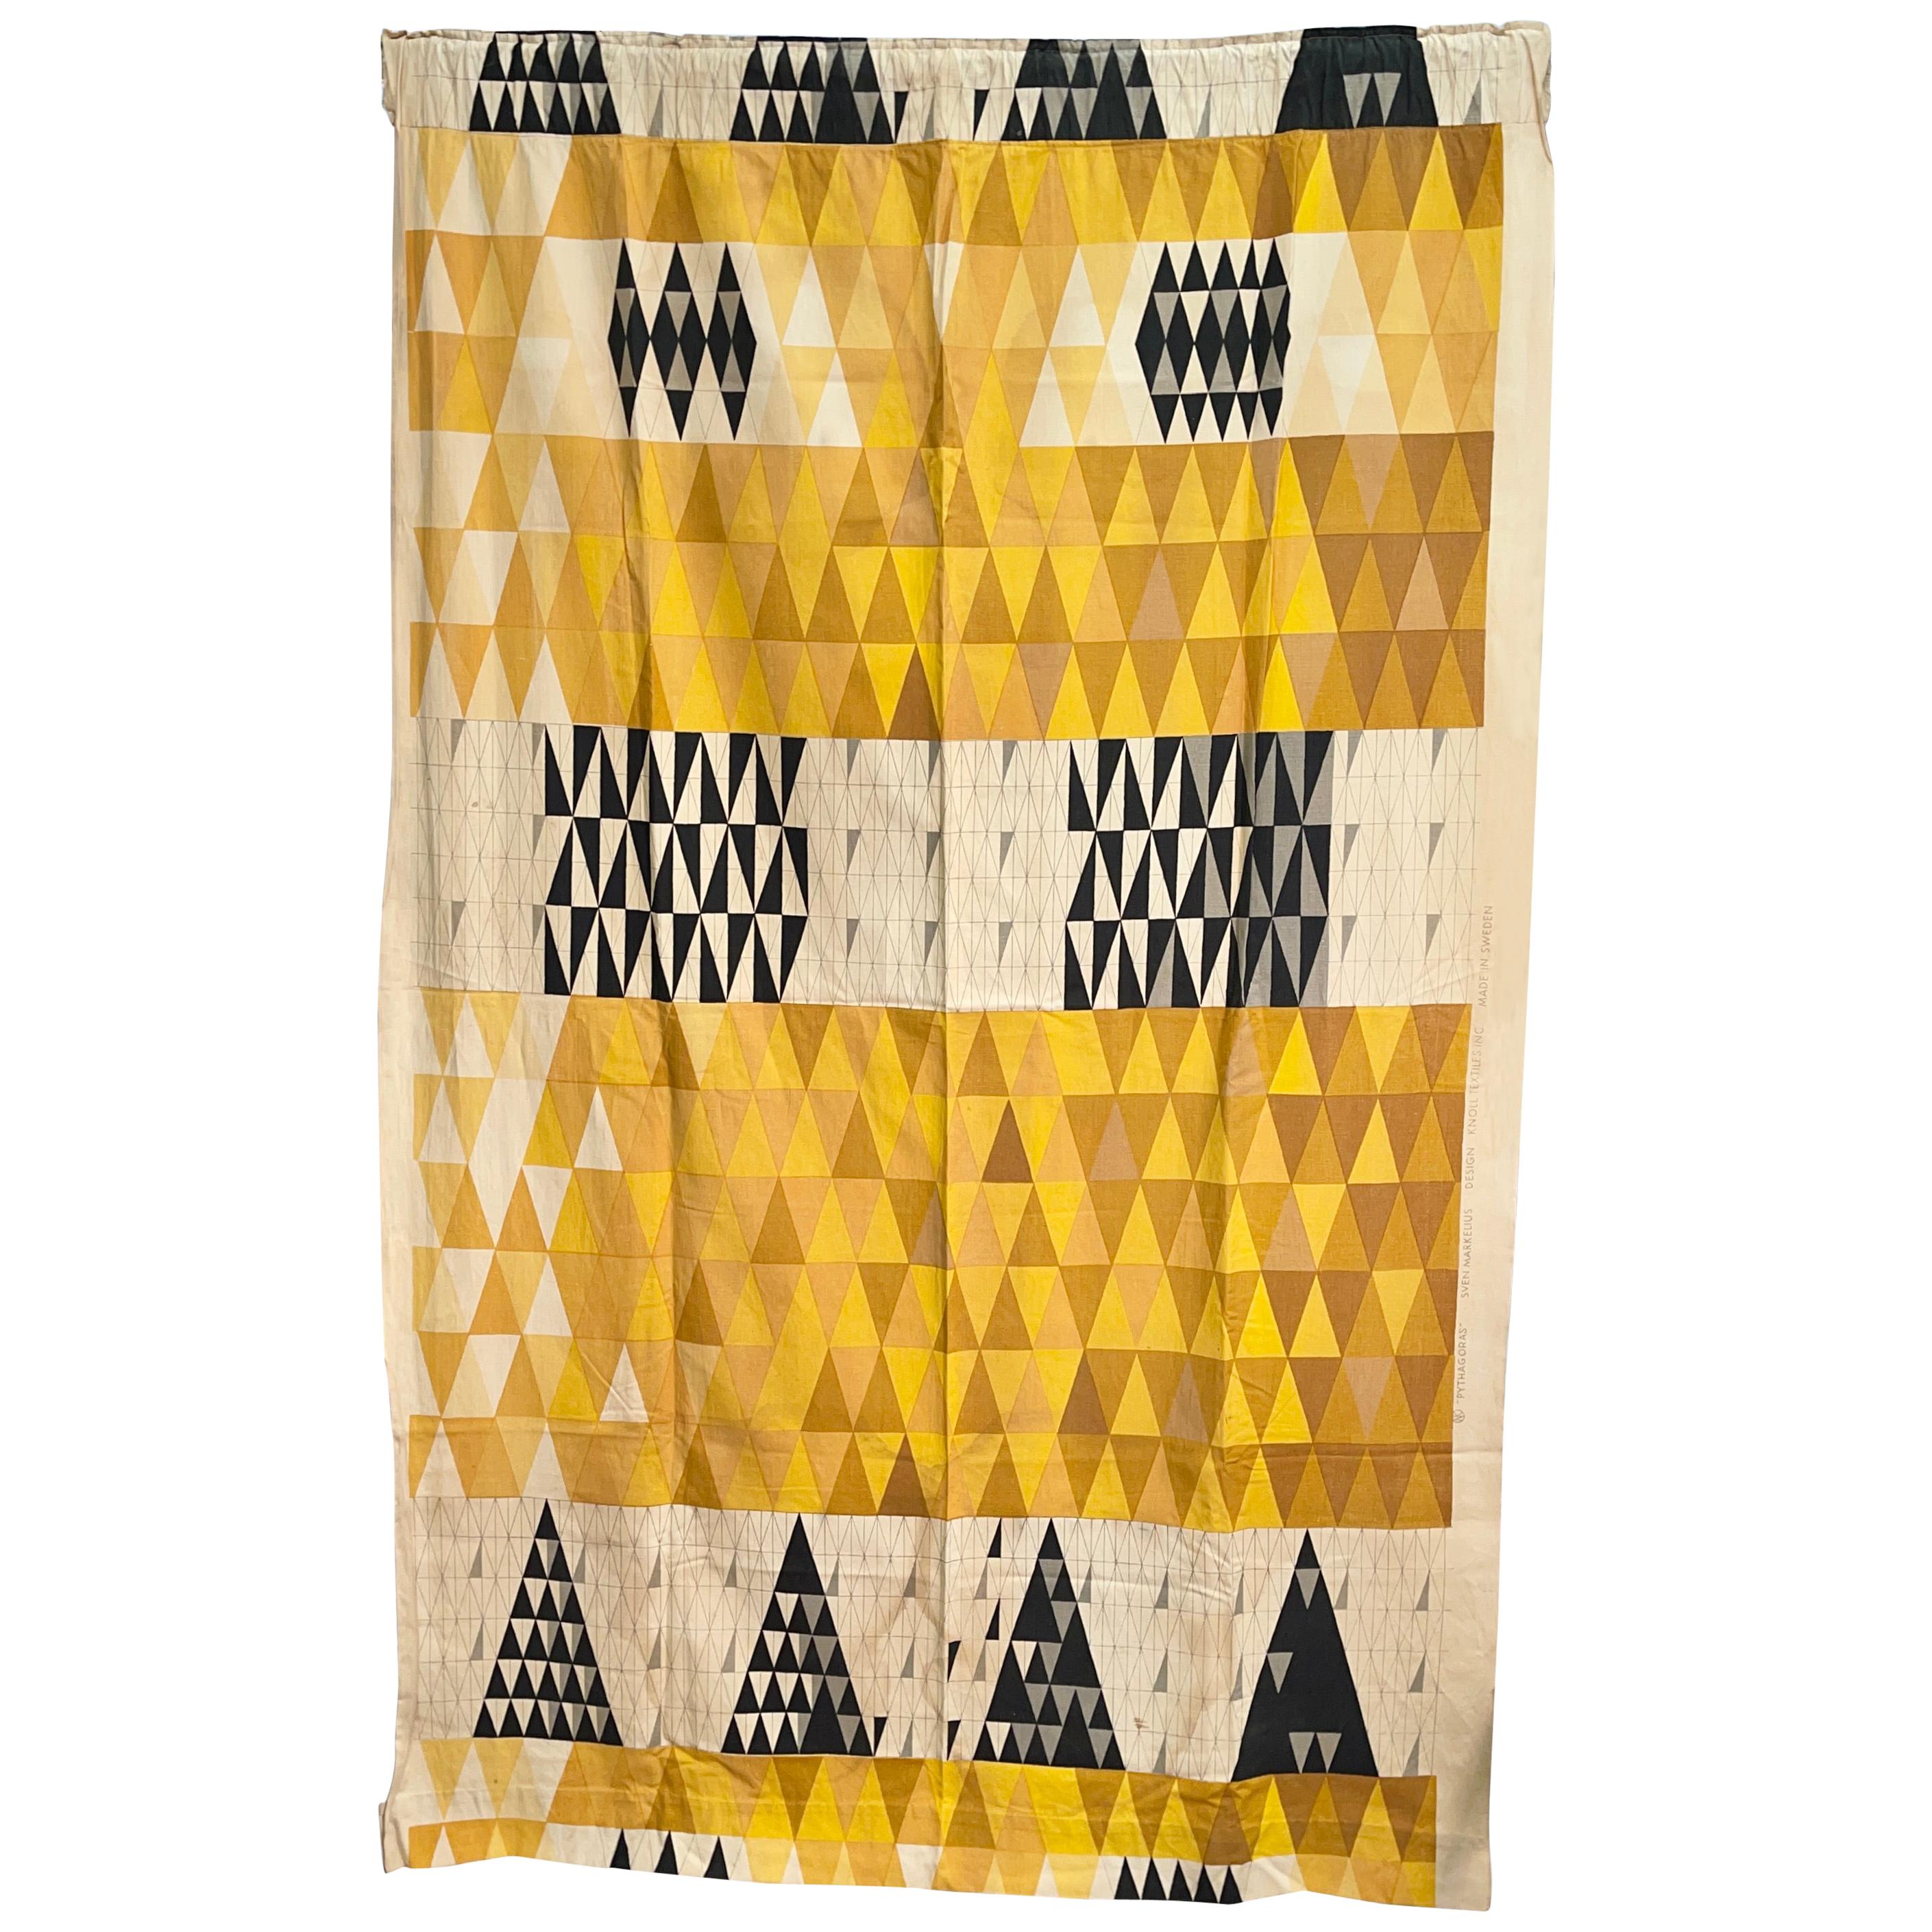 Sven Markelius "Pythagoras" for Knoll Textiles Drapery Panel